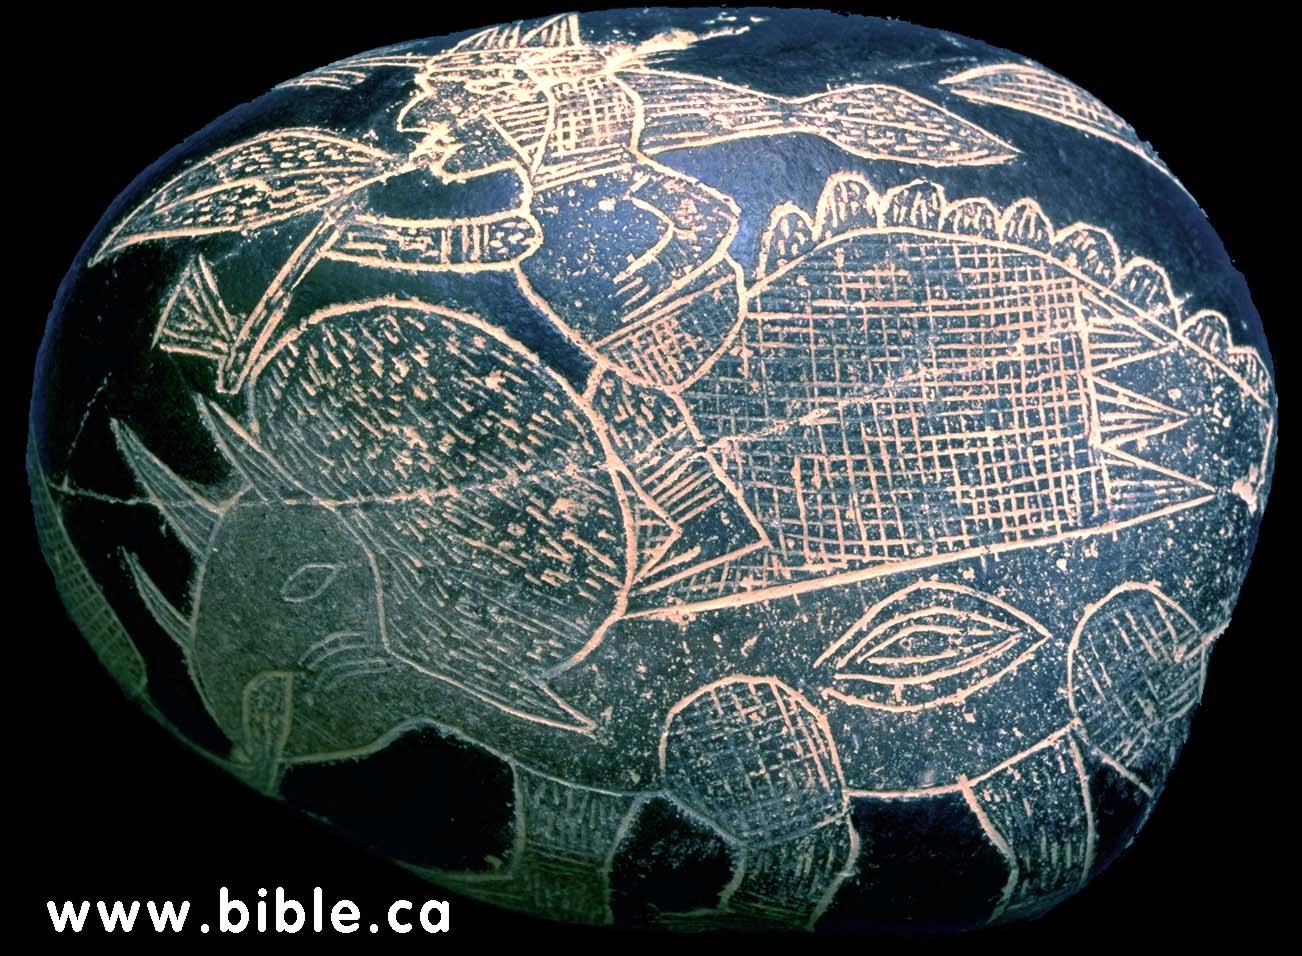 http://www.bible.ca/tracks/peru-tomb-rock-art-man-riding-triceratops.jpg